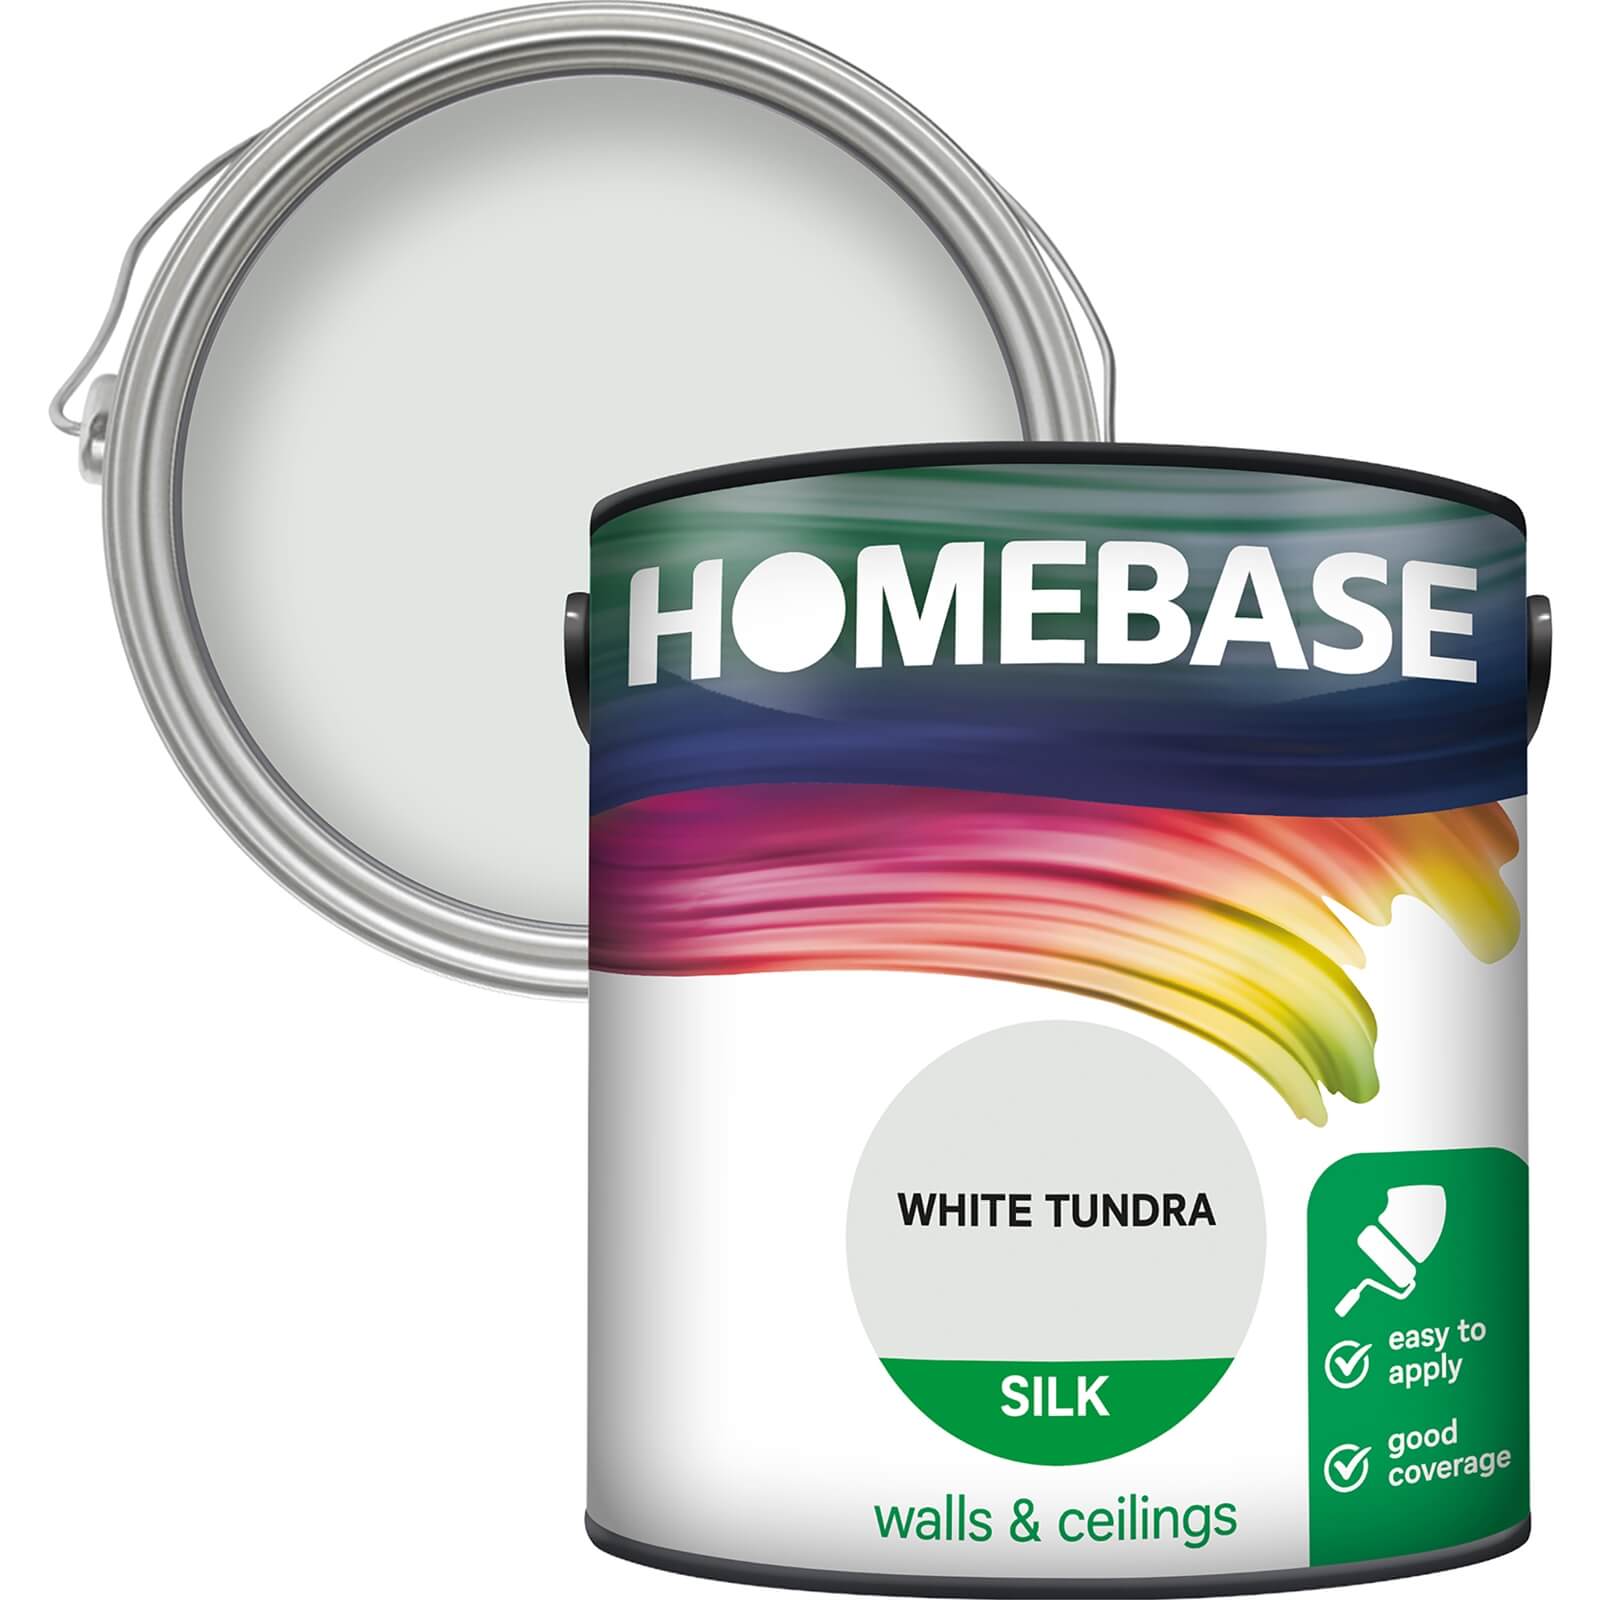 Homebase Silk Emulsion Paint White Tundra - 2.5L